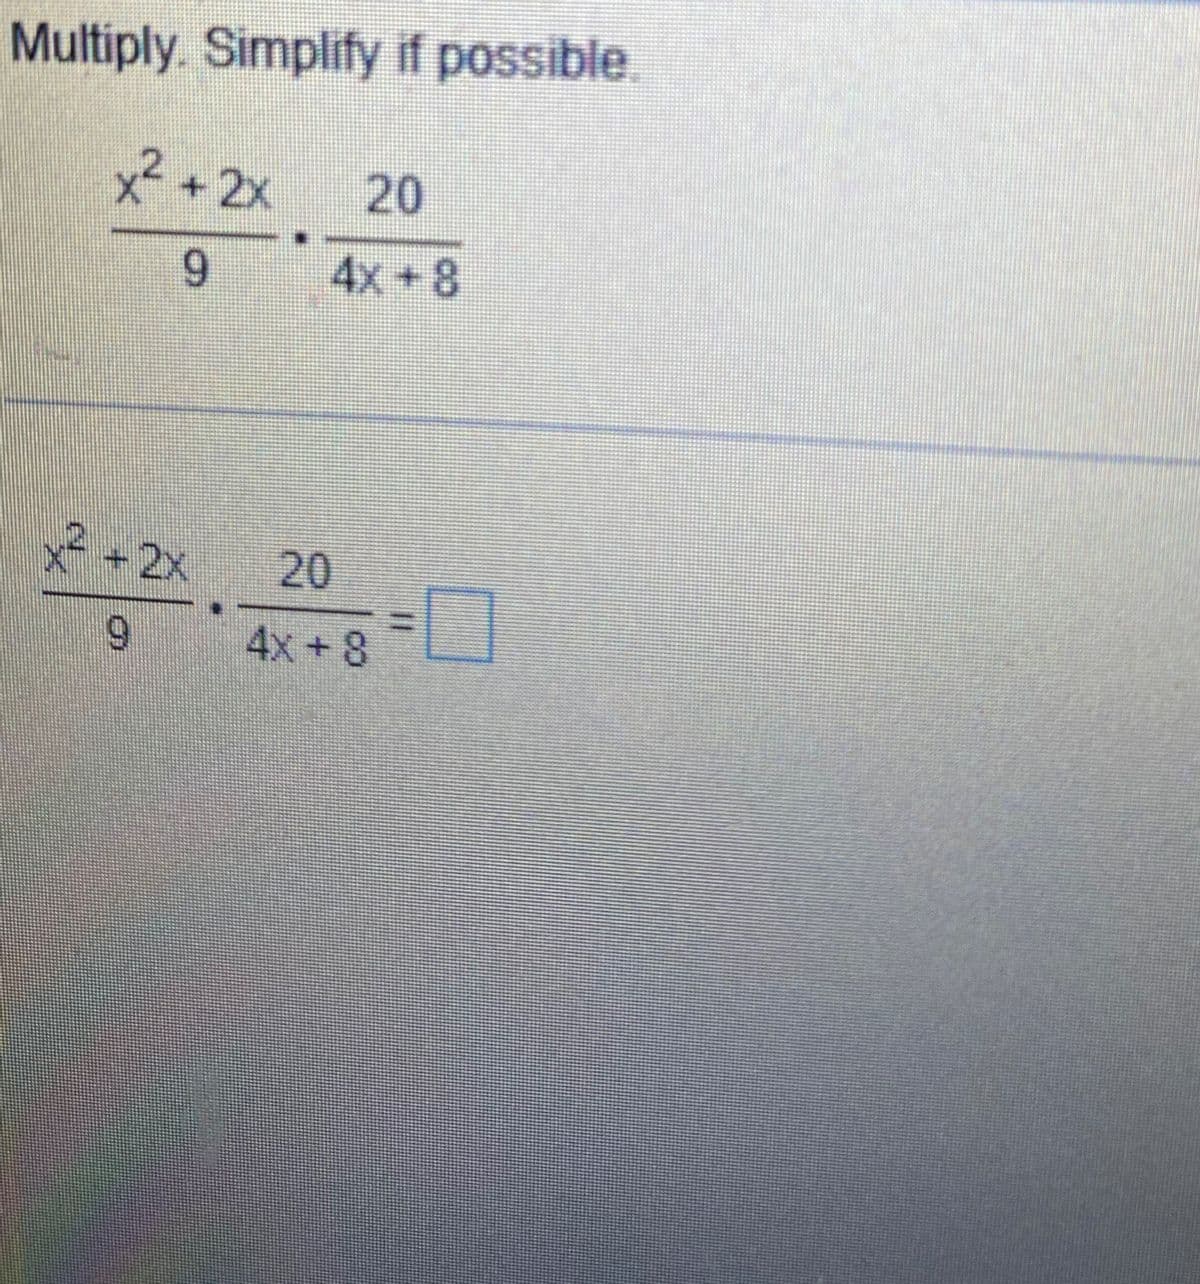 Multiply. Simplify if possible.
x² + 2x
9
x² + 2x
9
.
20
4x+8
20
4x+8
11
0